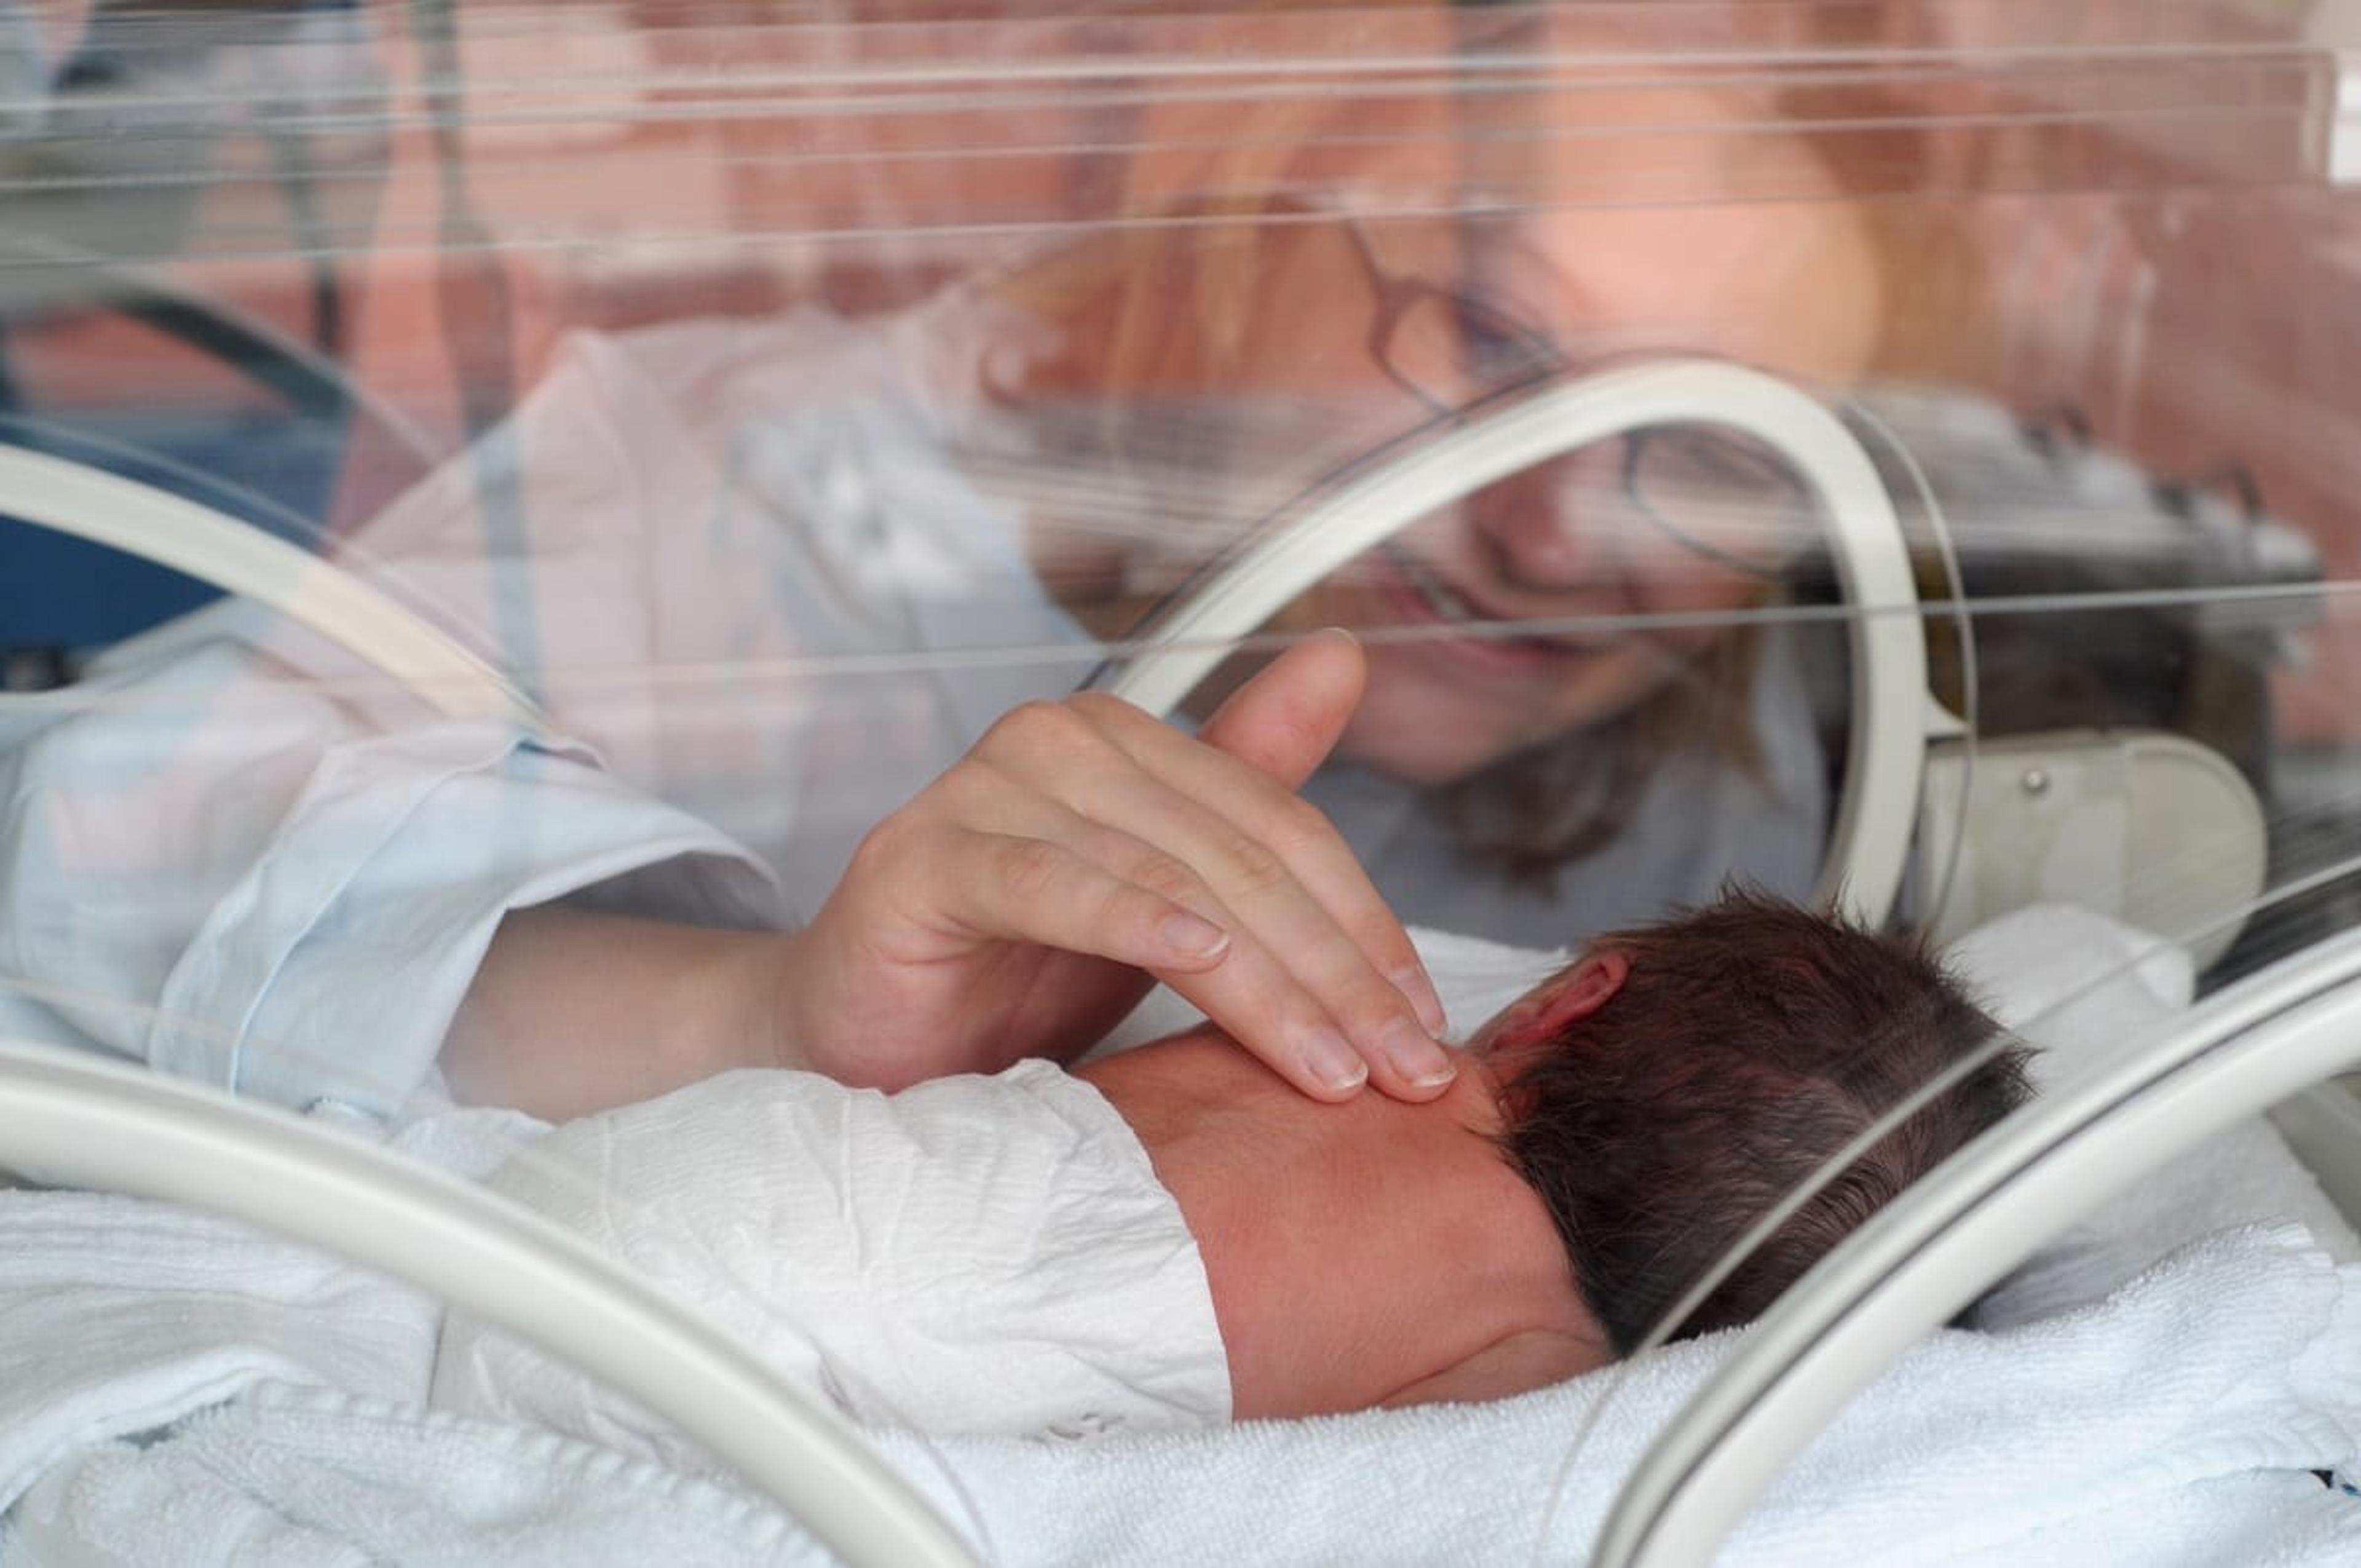 Woman comforts newborn baby in incubator